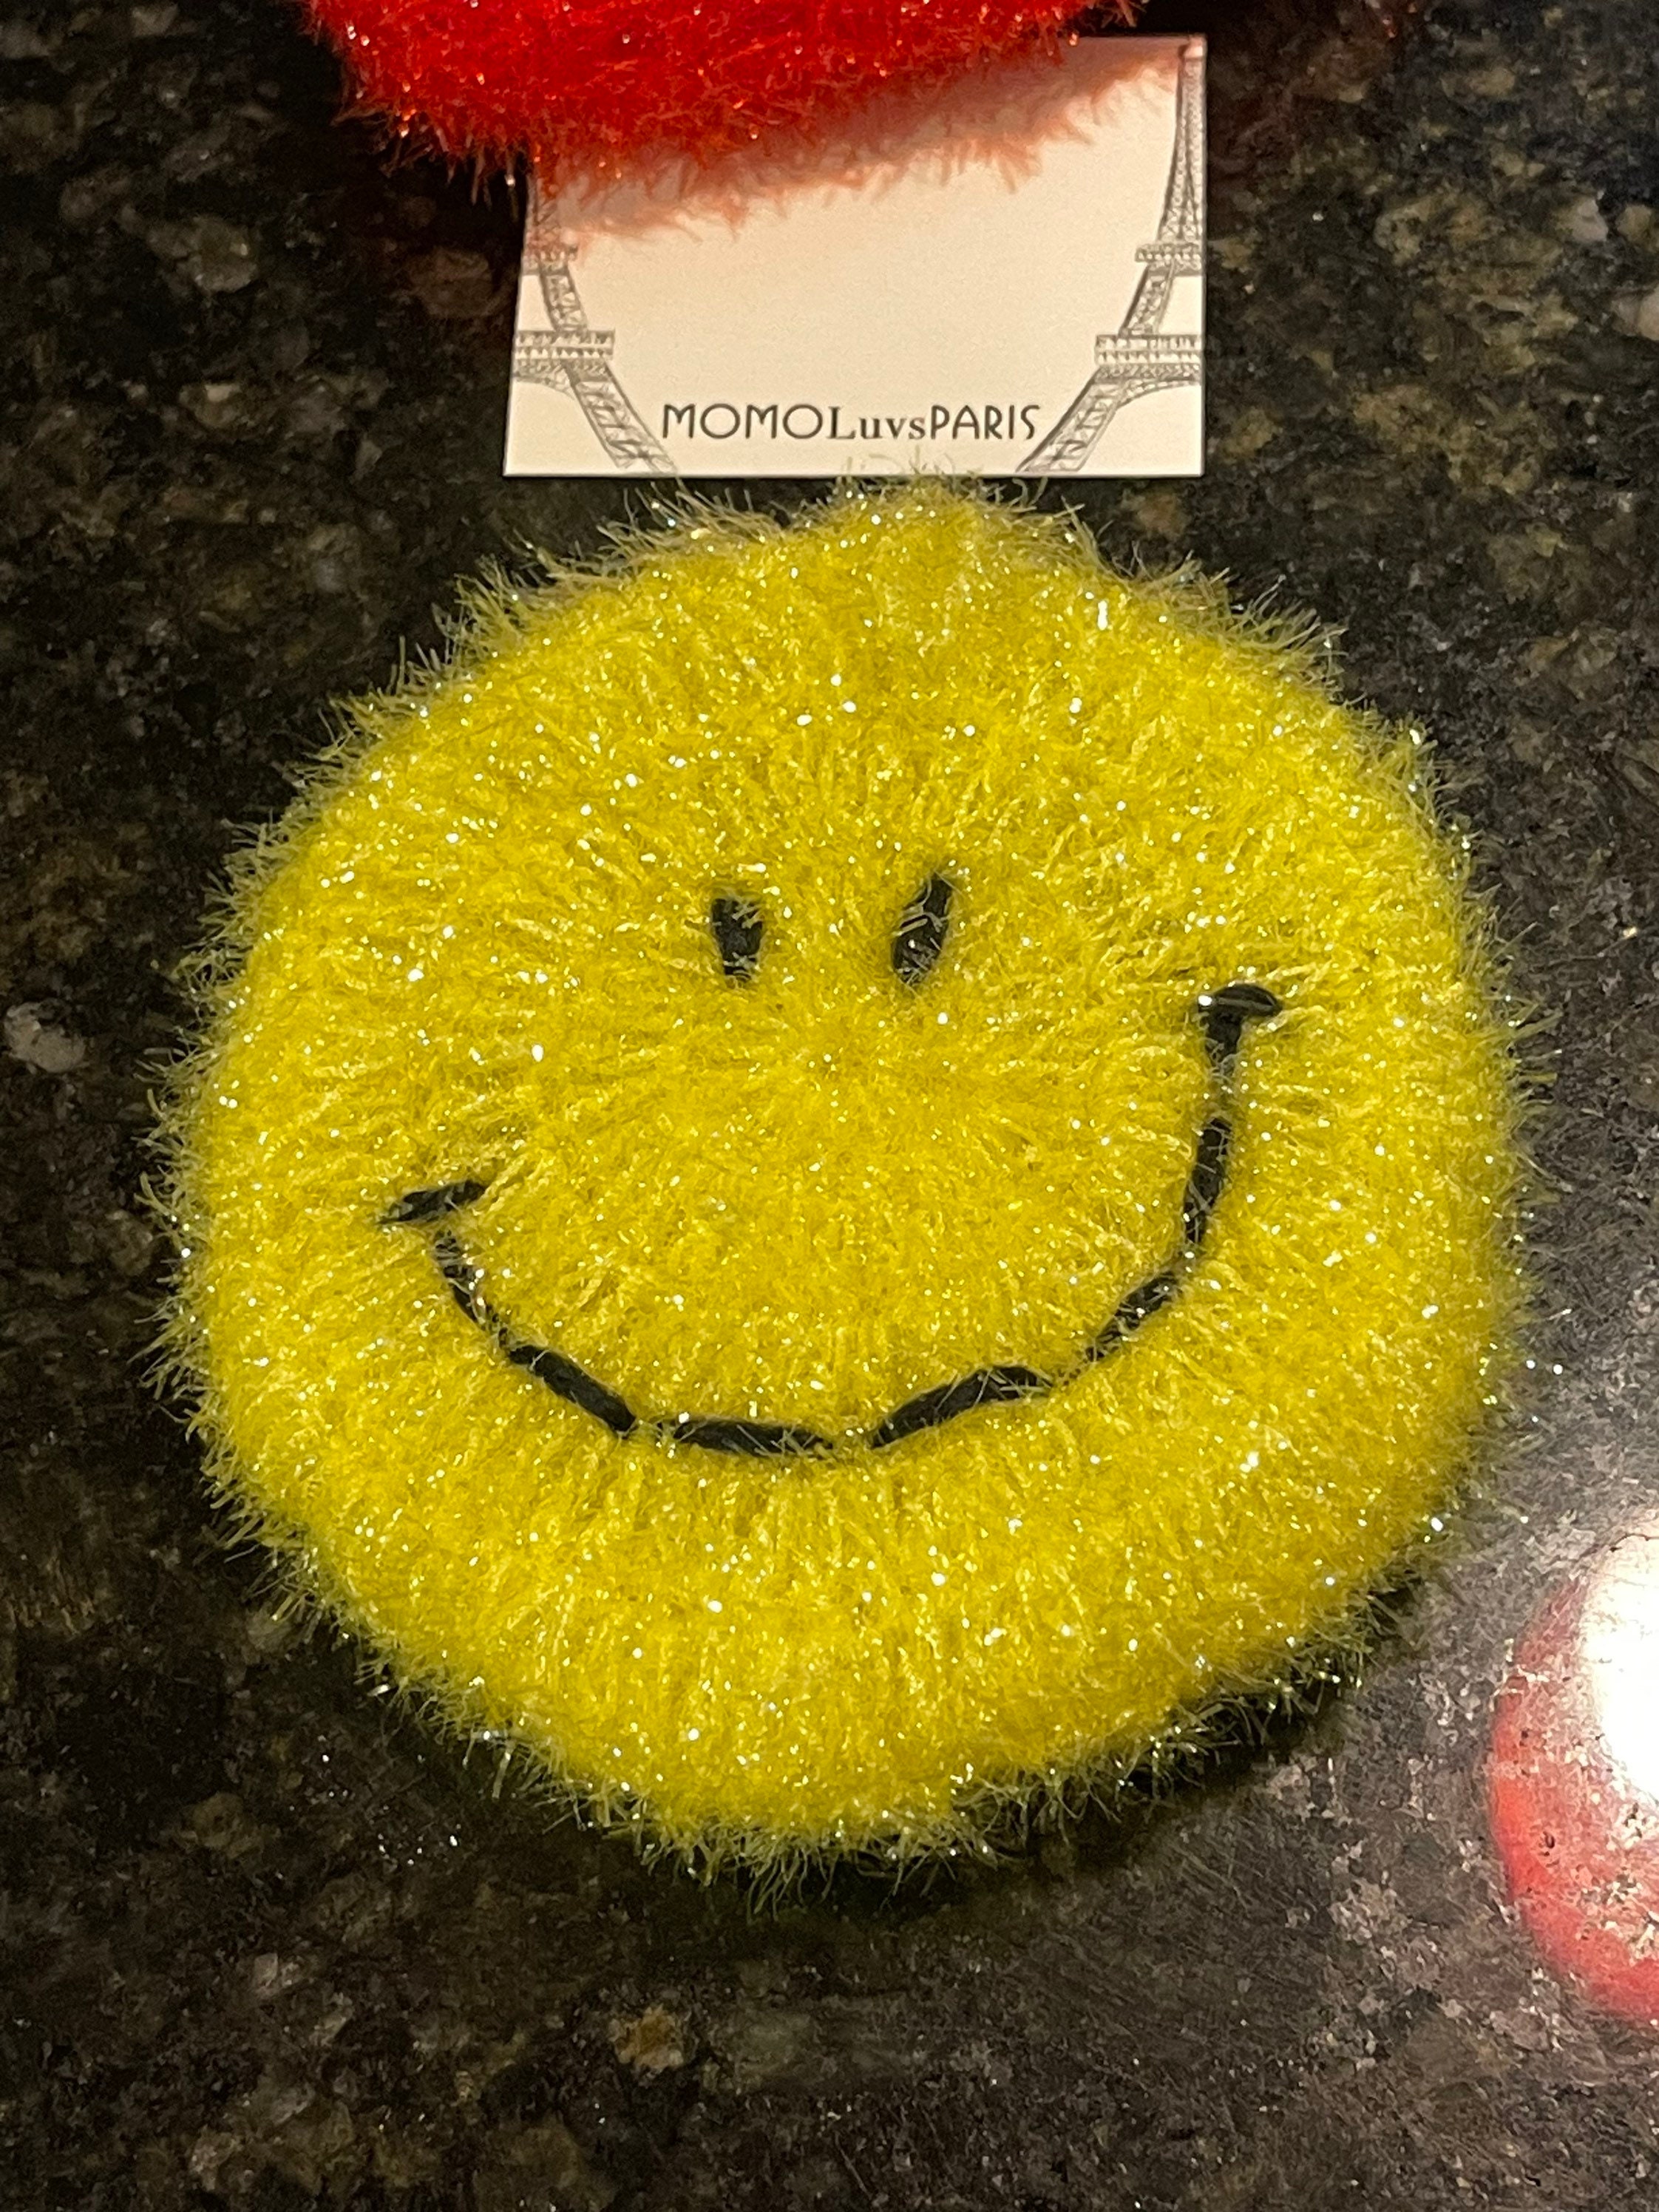 UANGLI Cute Smiley Face Sponge Cleaning Wipe Imitation loofah Sponge Wiping  Honeycomb Sponge Household Kitchen Cleaning dishwashing Cotton